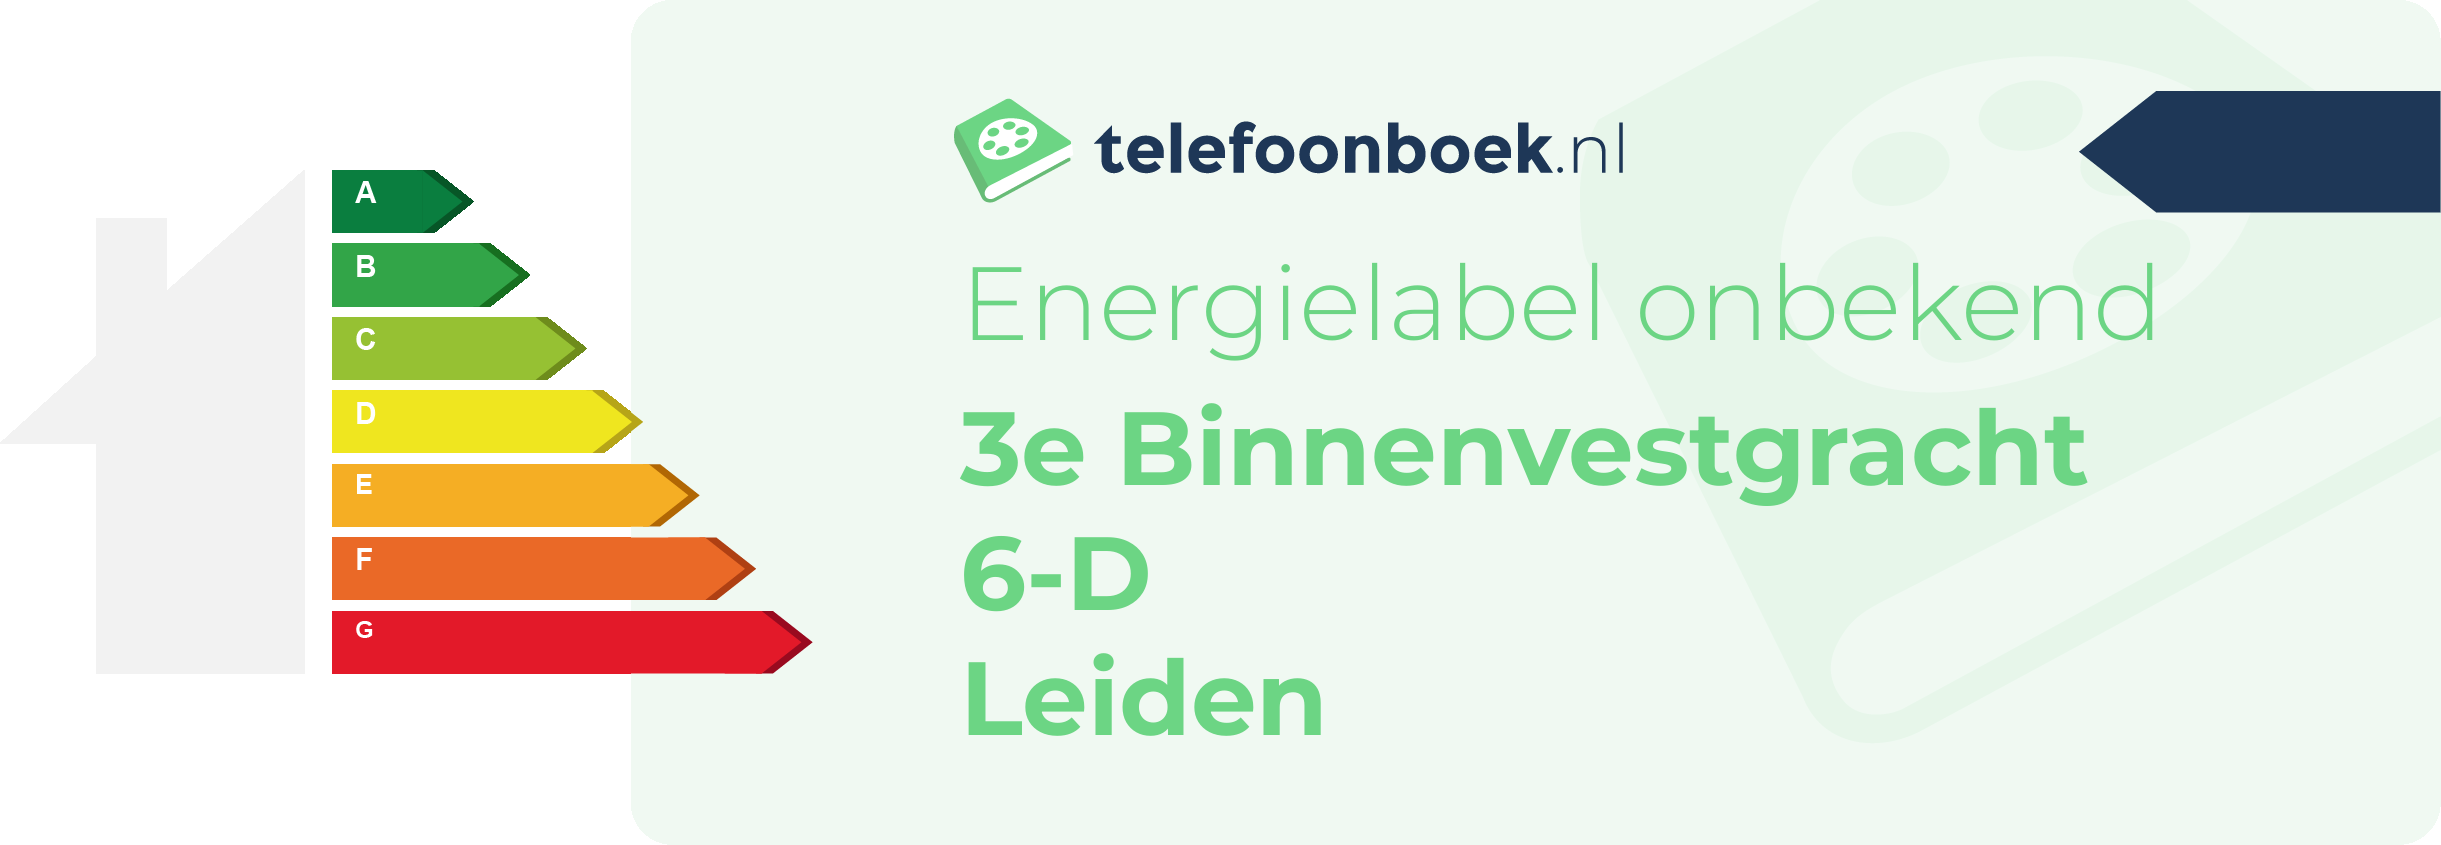 Energielabel 3e Binnenvestgracht 6-D Leiden